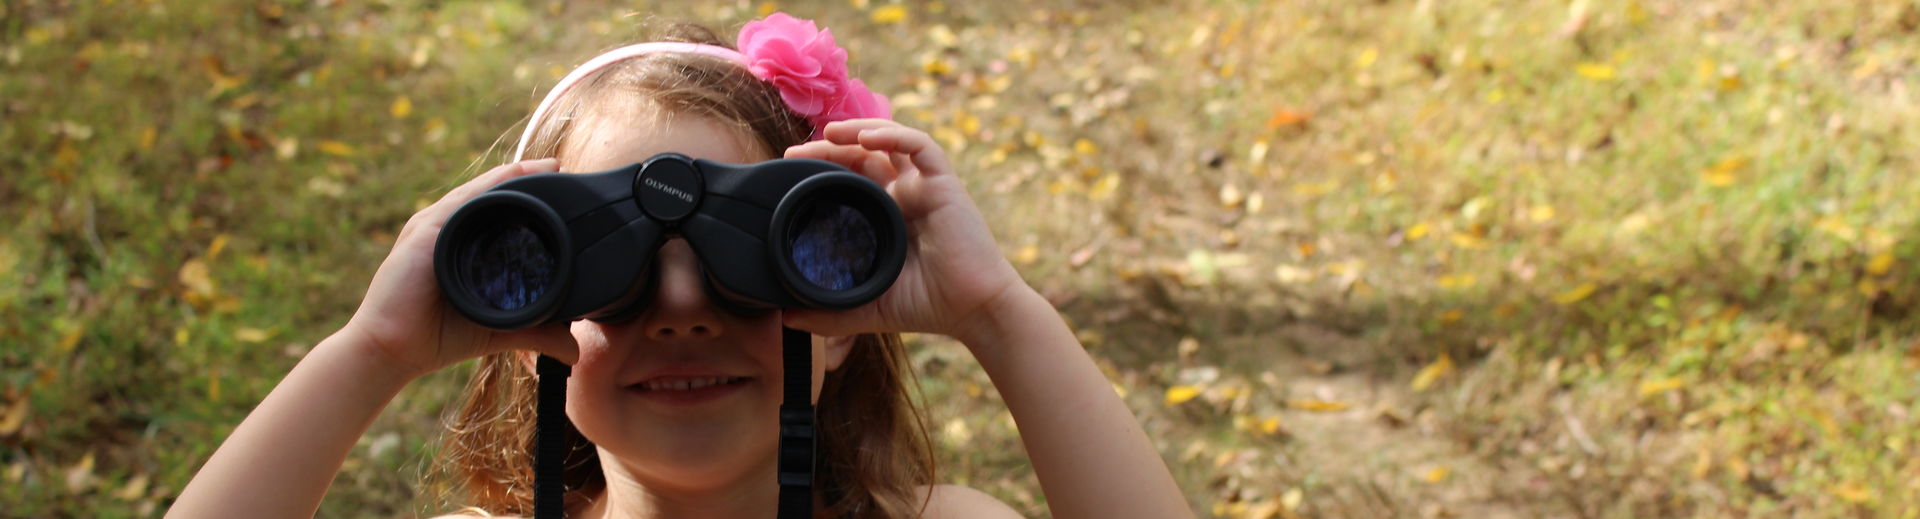 Girl looking through binoculars at the camera